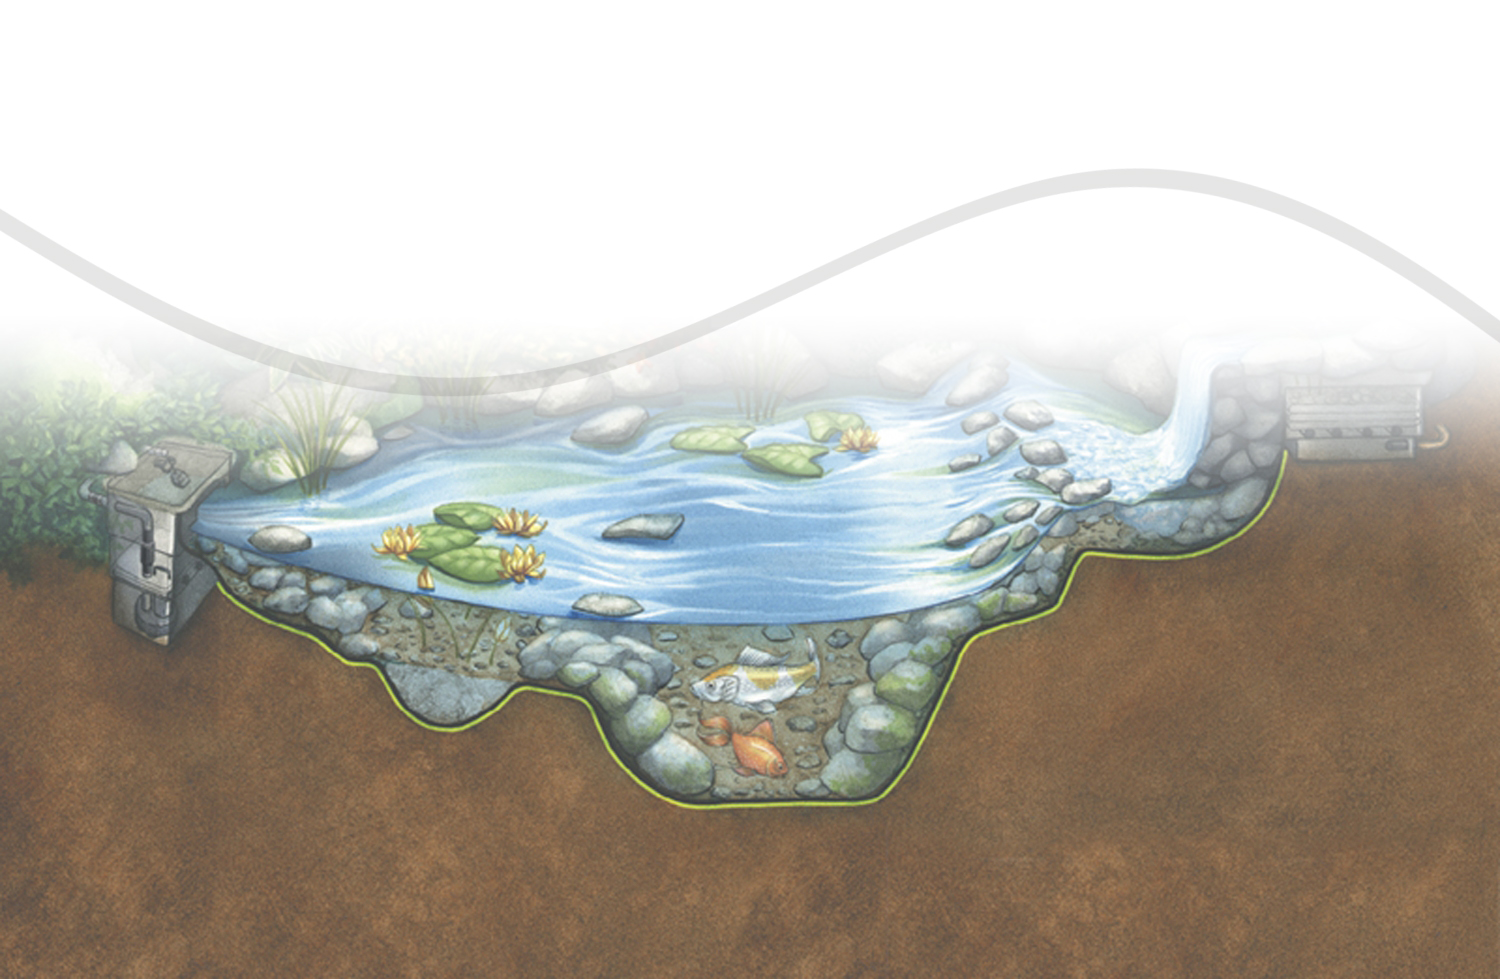 Aquascape ecosystem Backgrounds powerpoint backgrounds